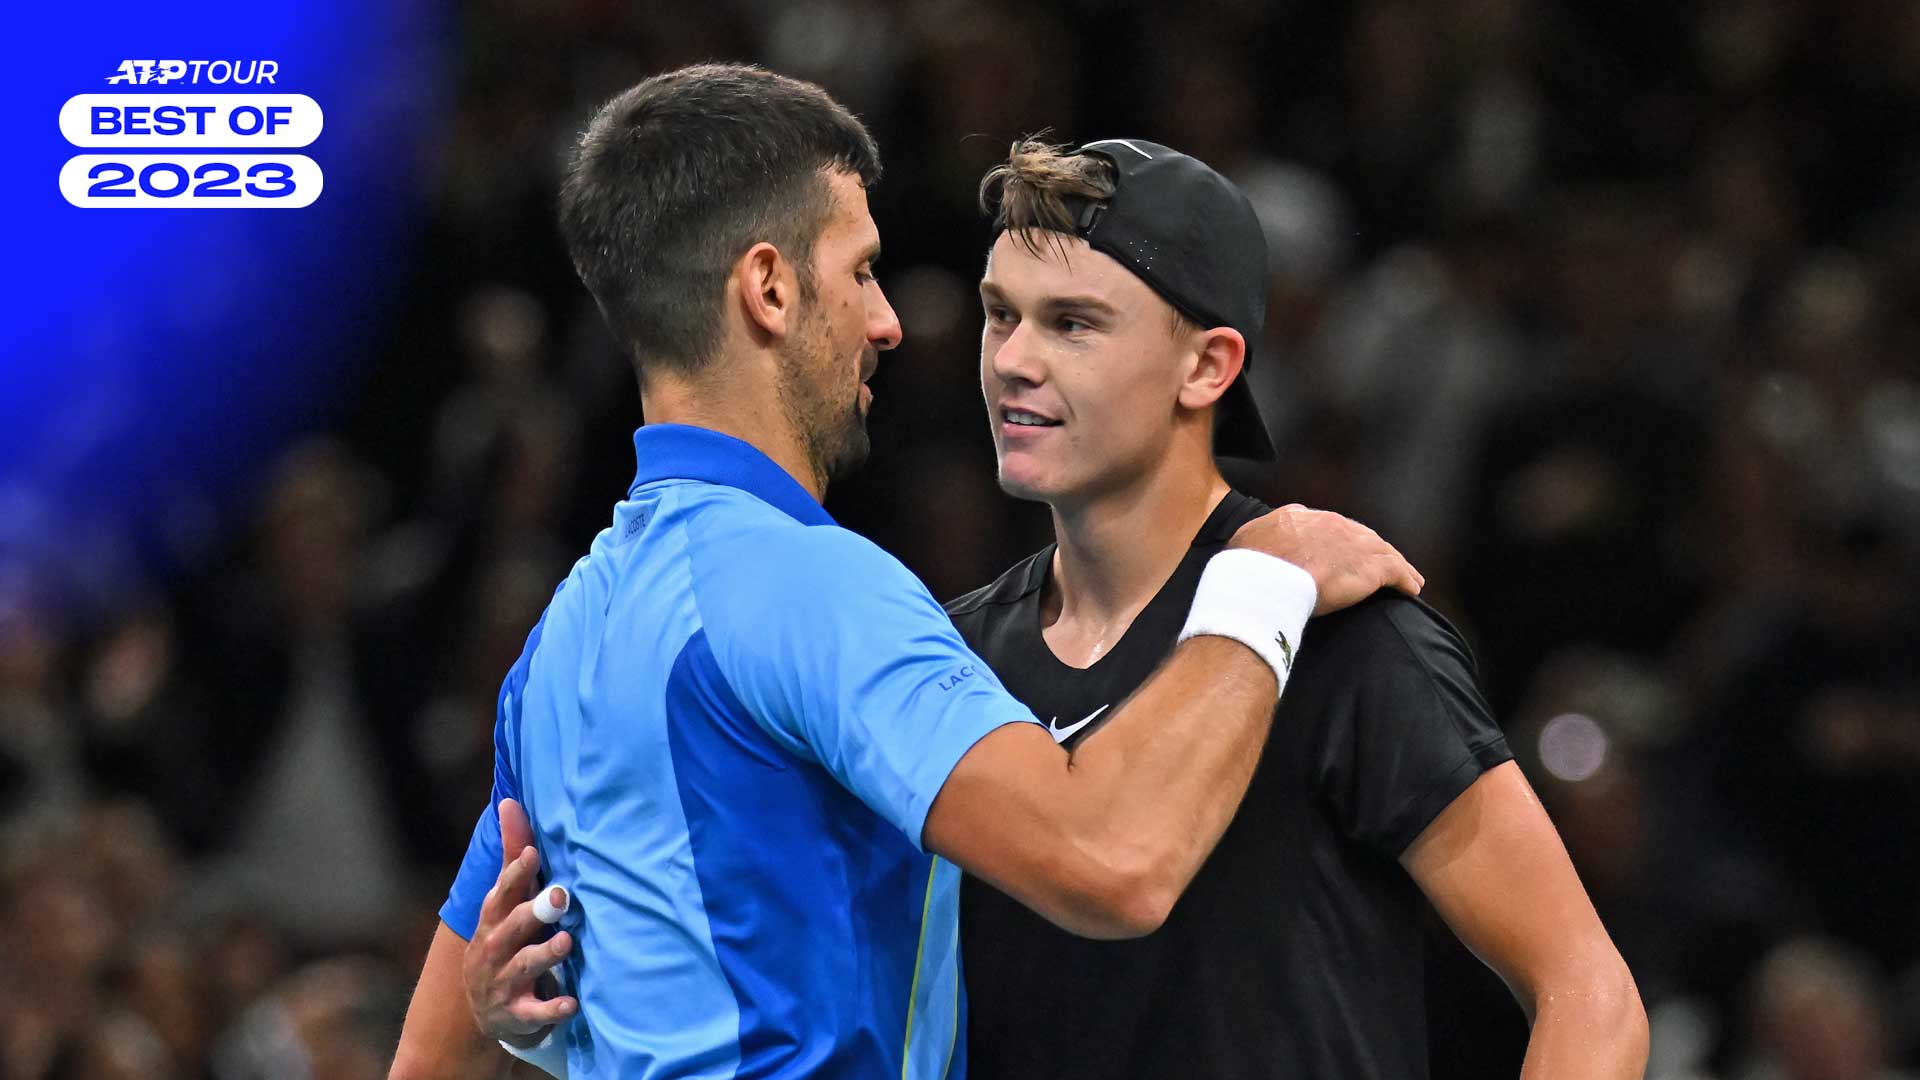 Rivalries Of 2023: Djokovic vs. Rune